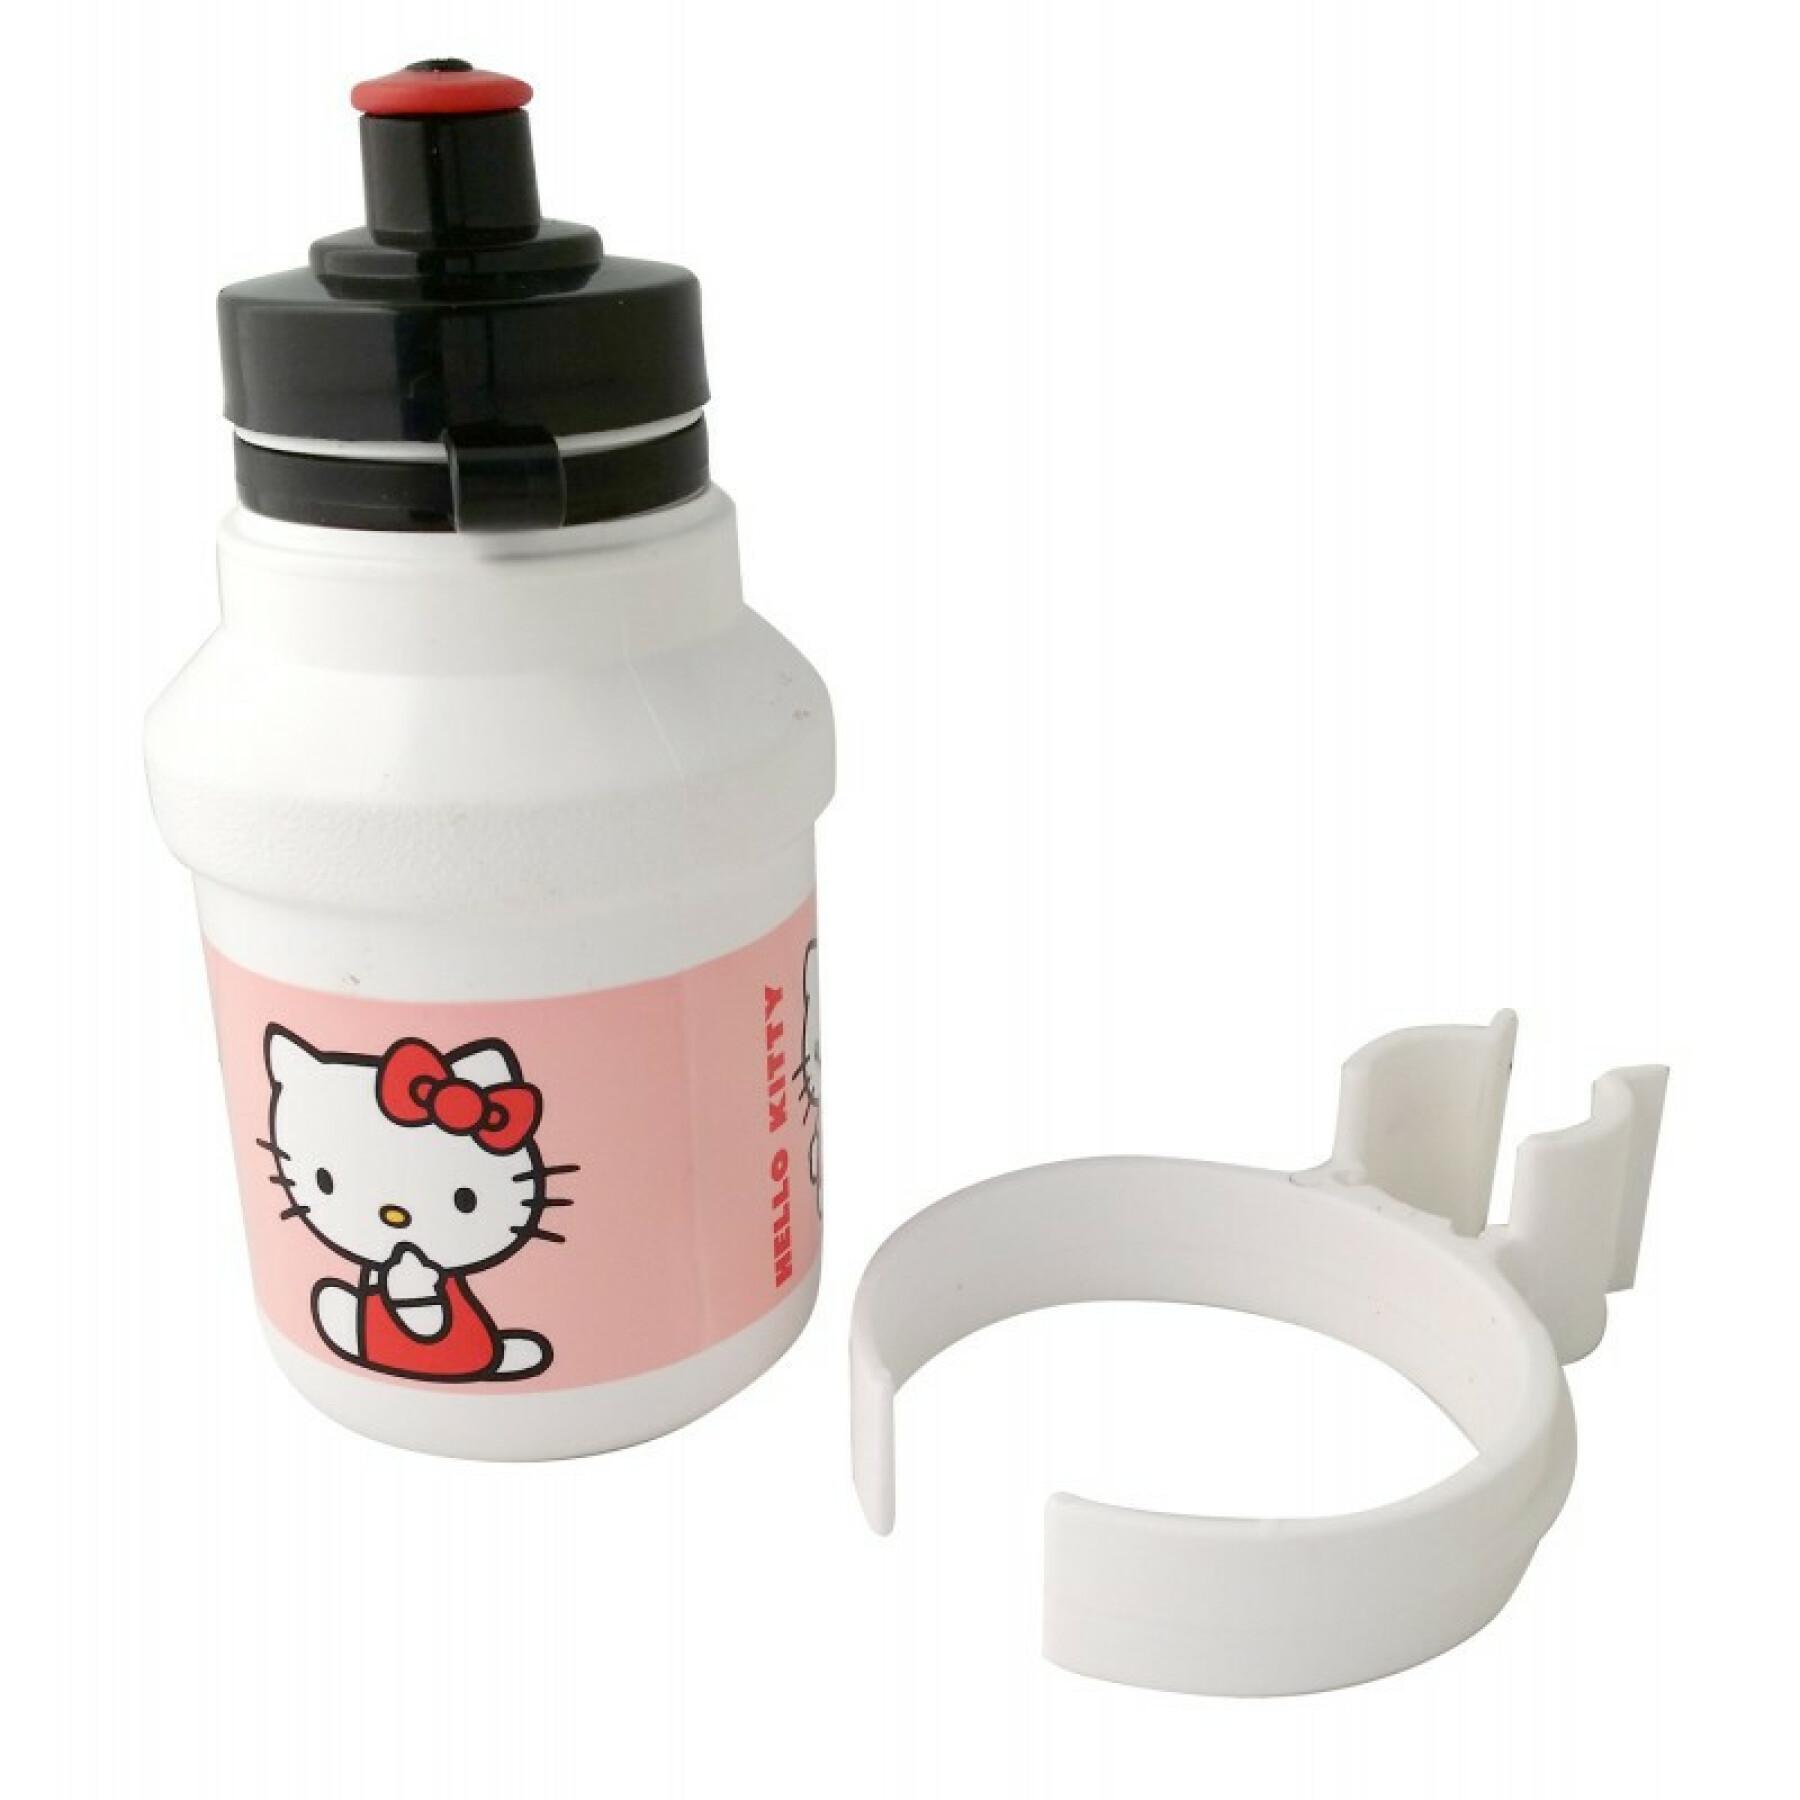 Garrafa + suporte para garrafa para raparigas Hello Kitty